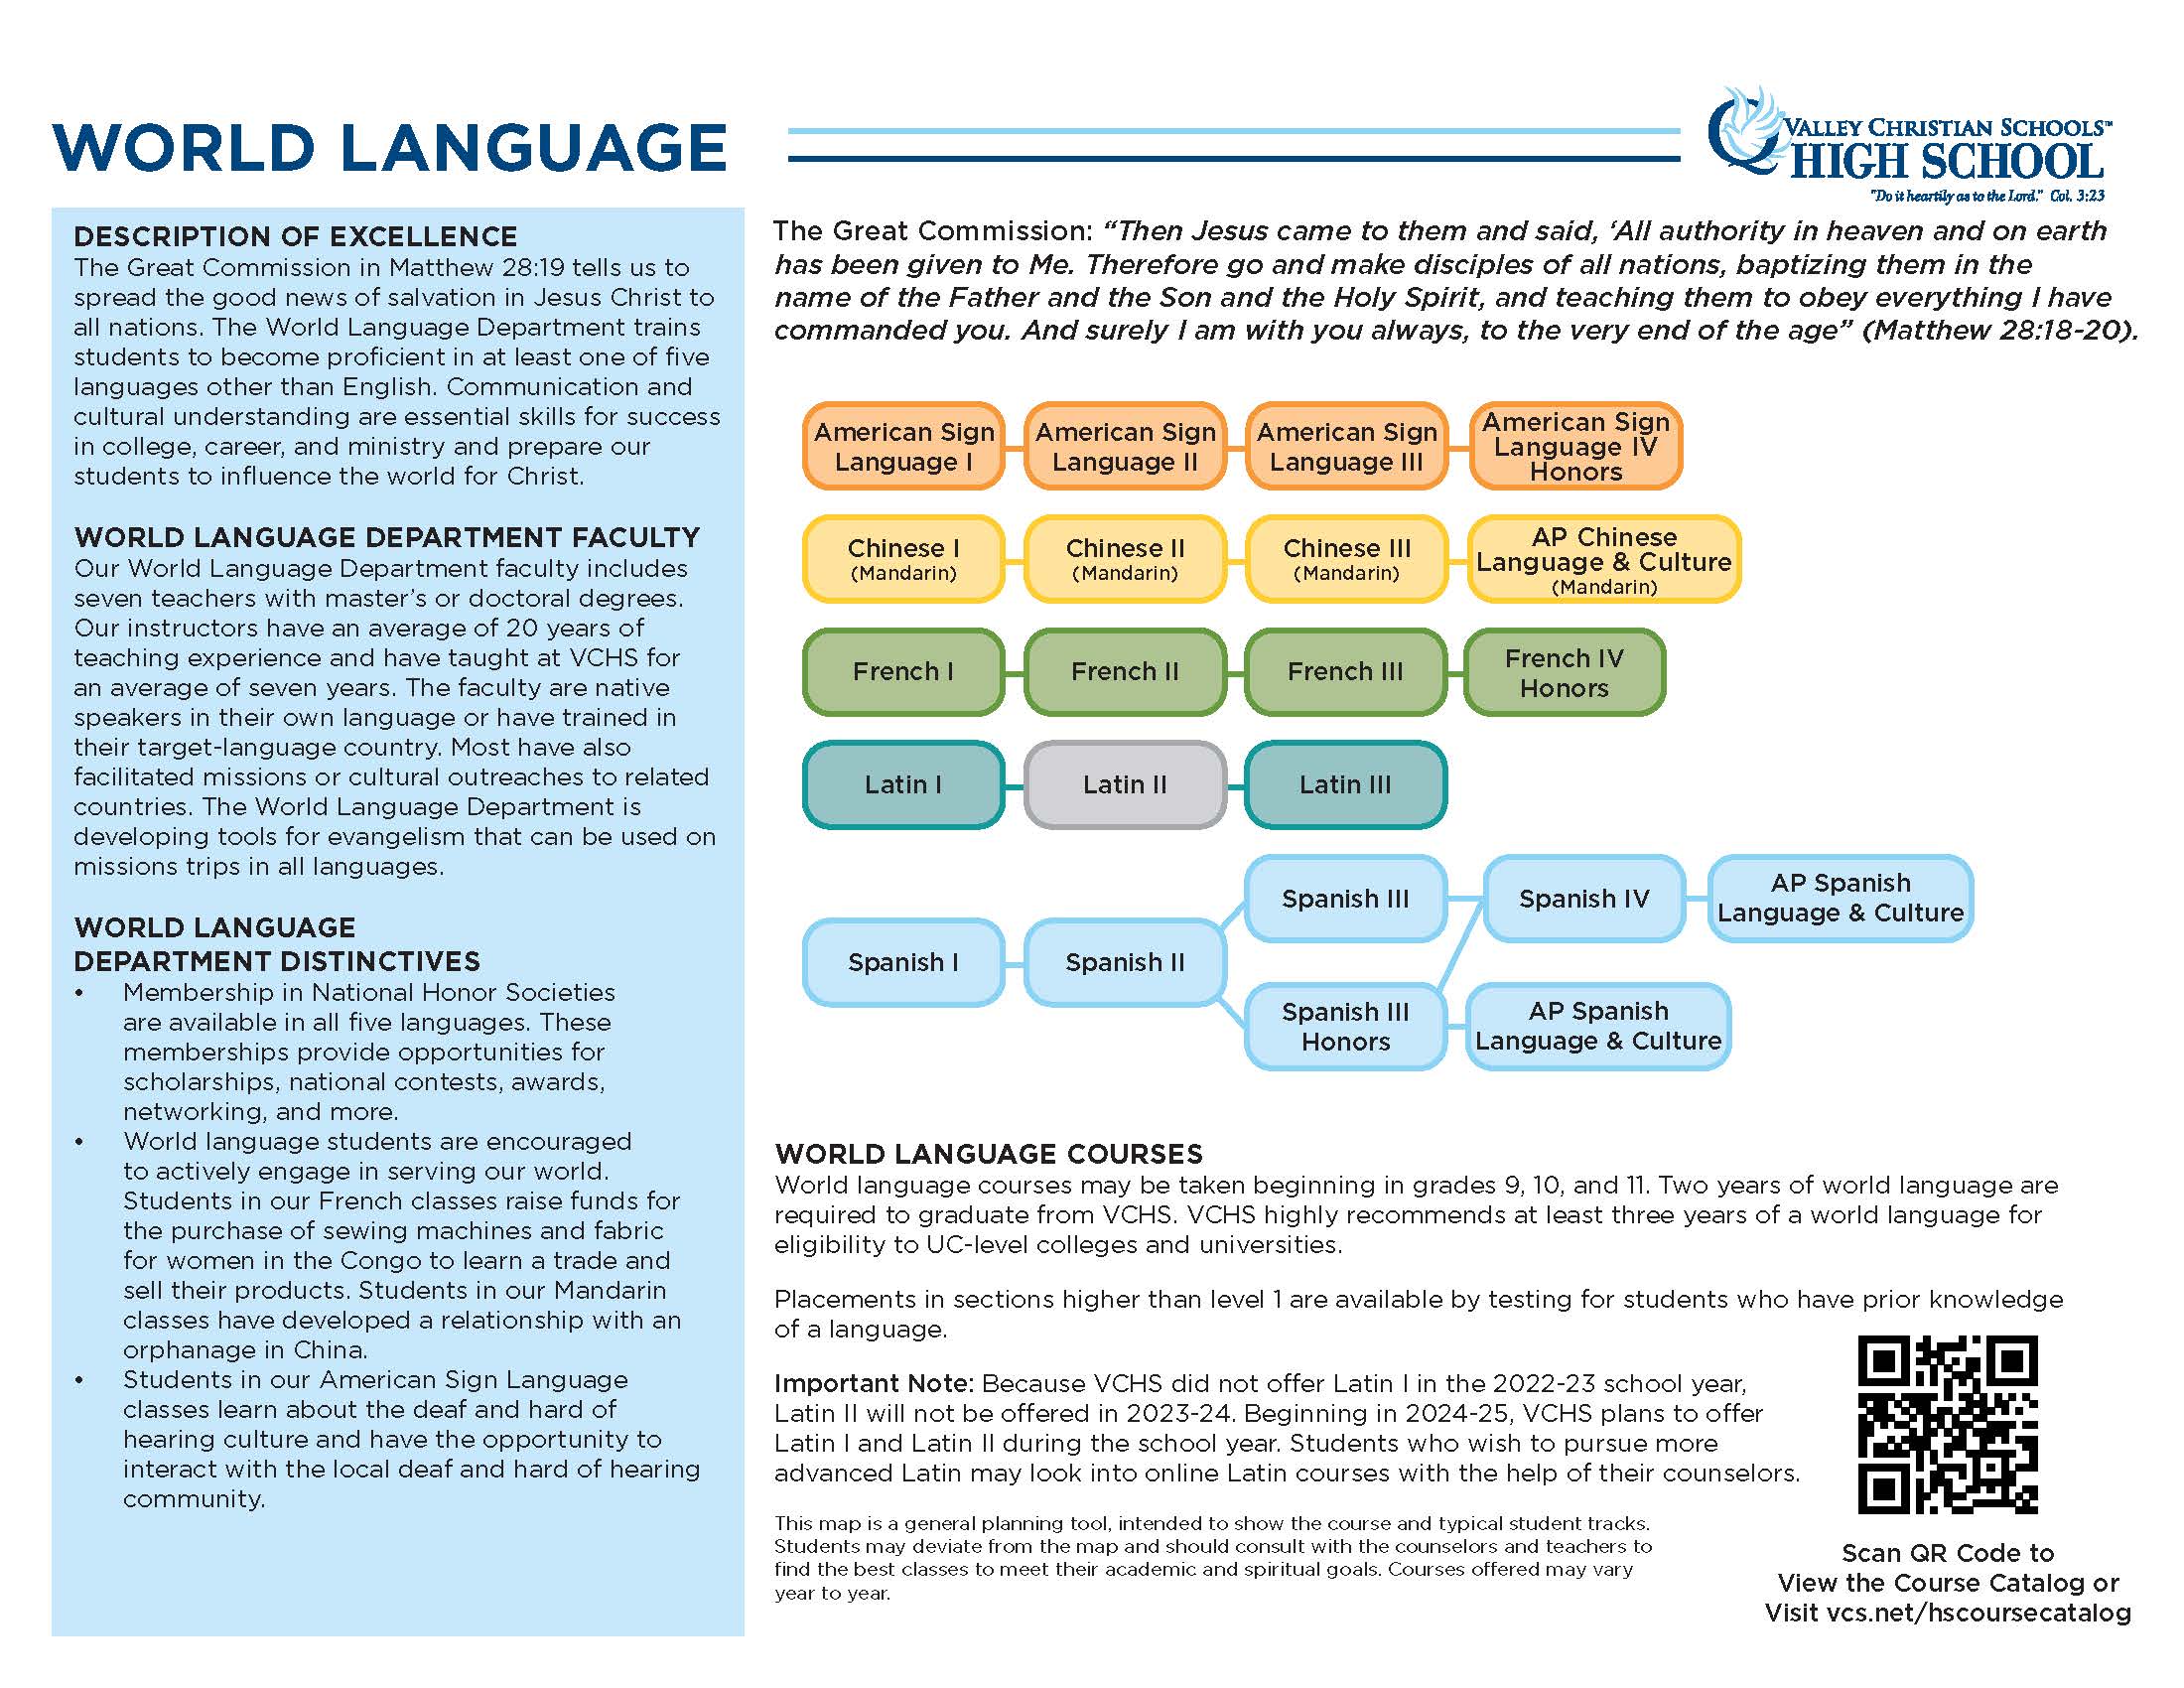 World Language Course Map